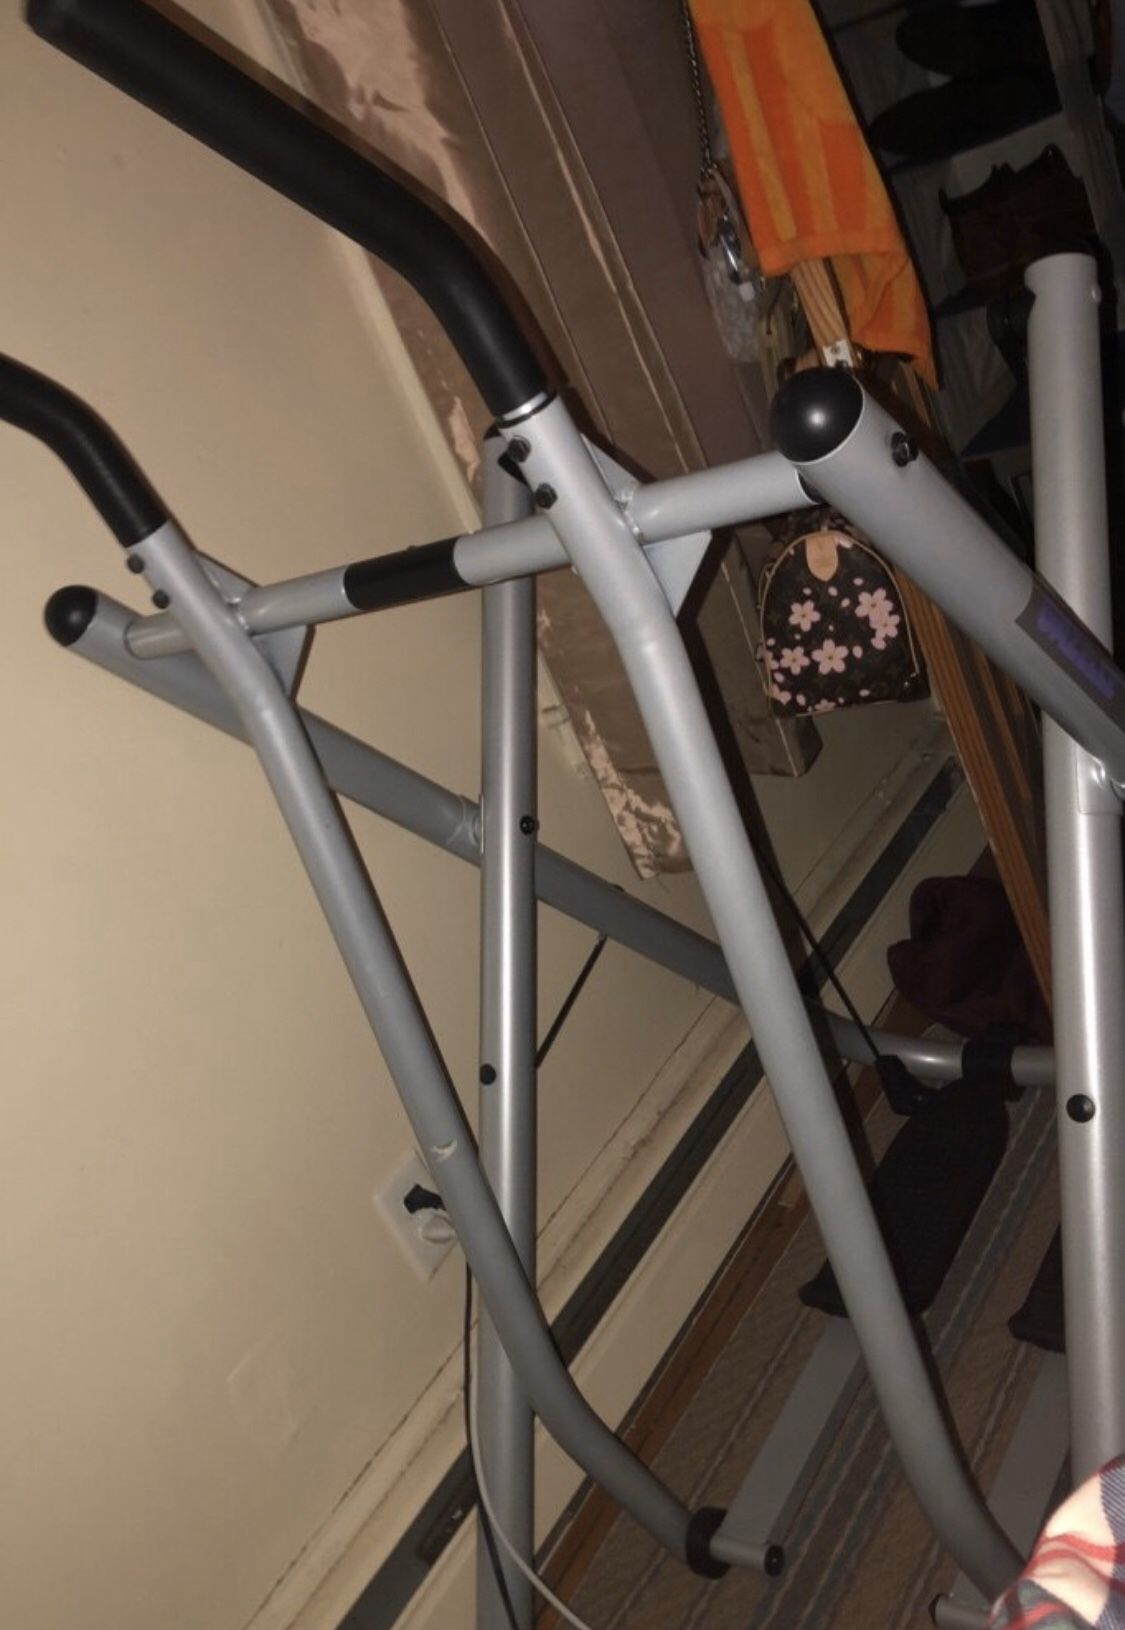 Gazelle workout machine